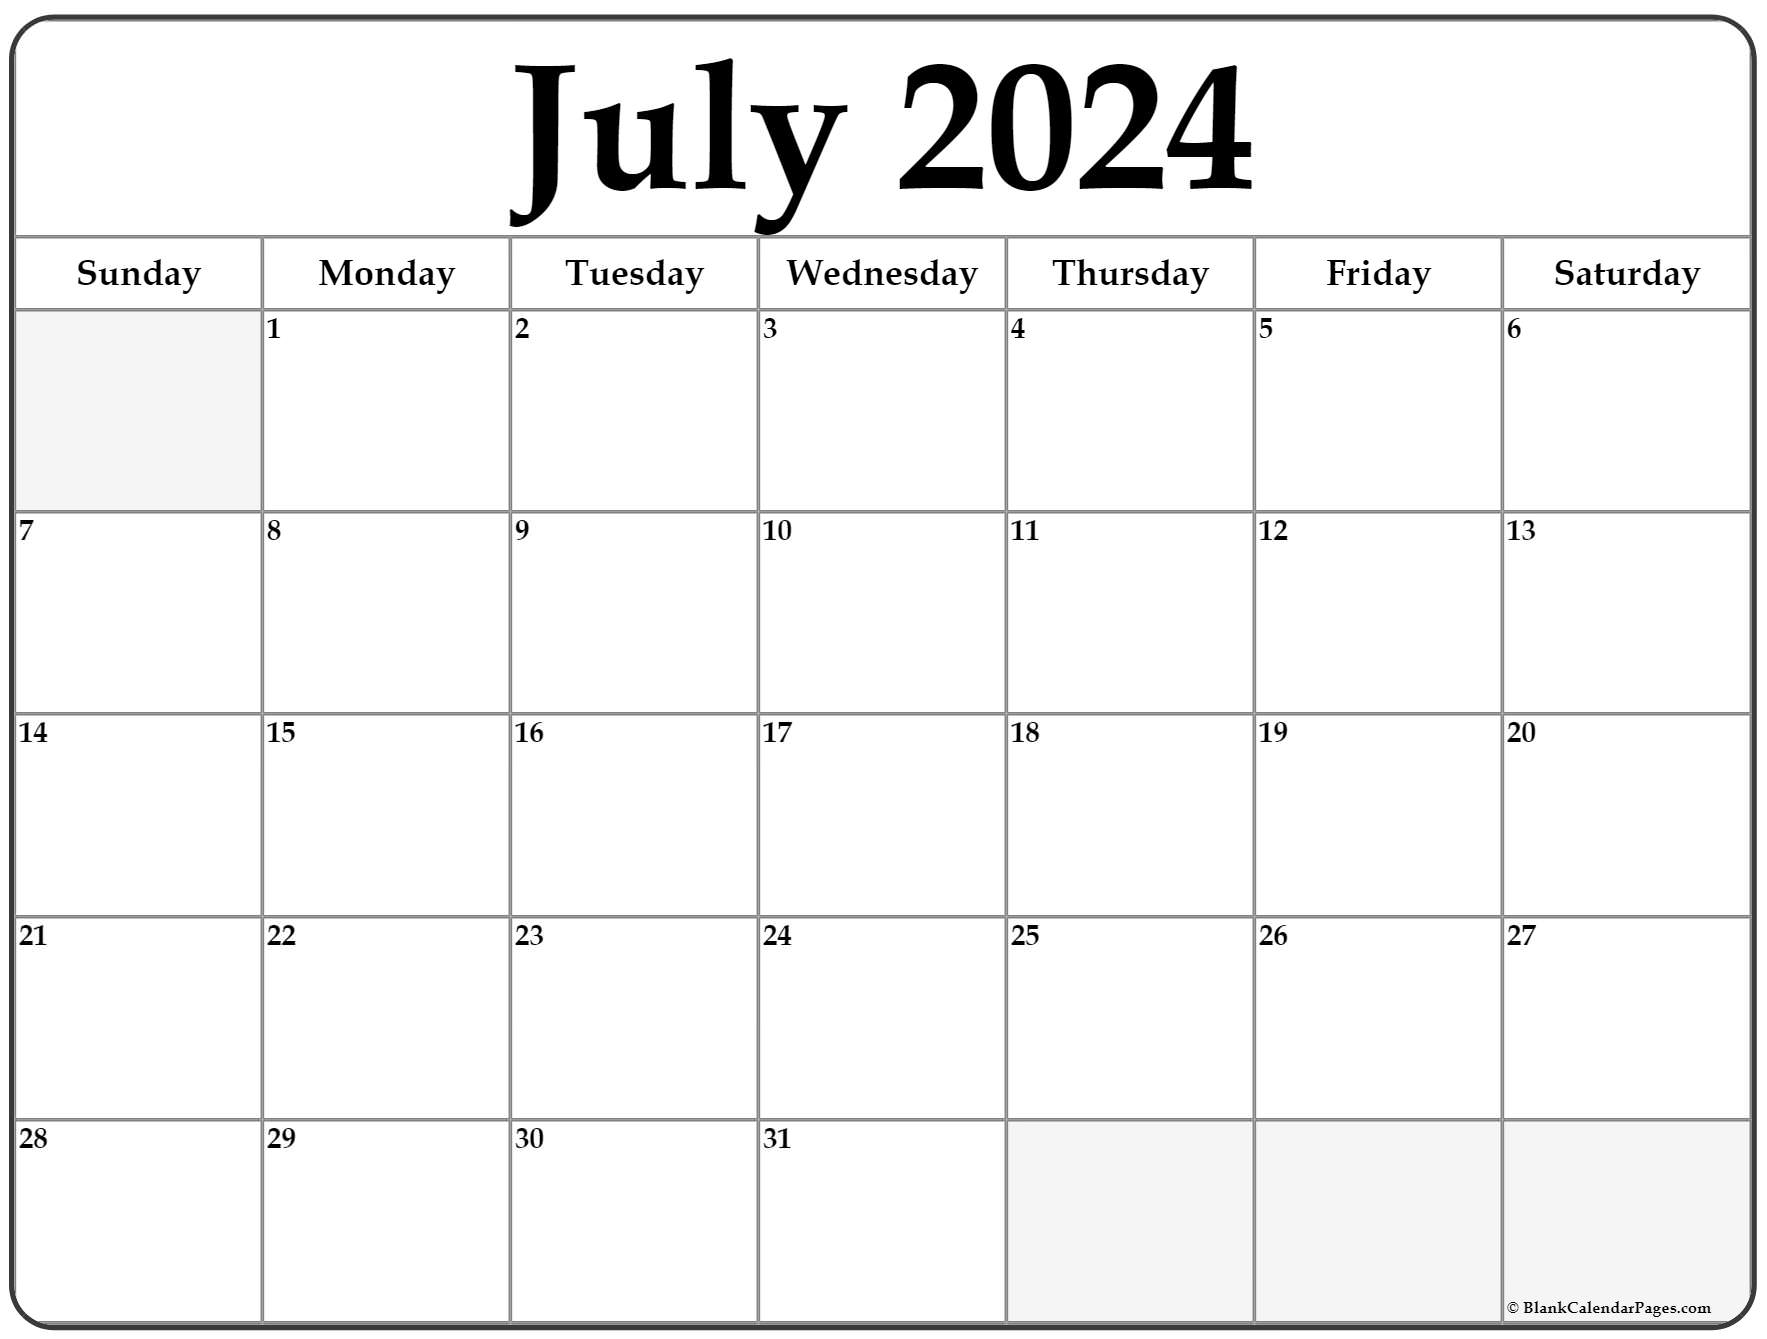 July 2024 Calendar | Free Printable Calendar for Summer Calendar Printable 2024